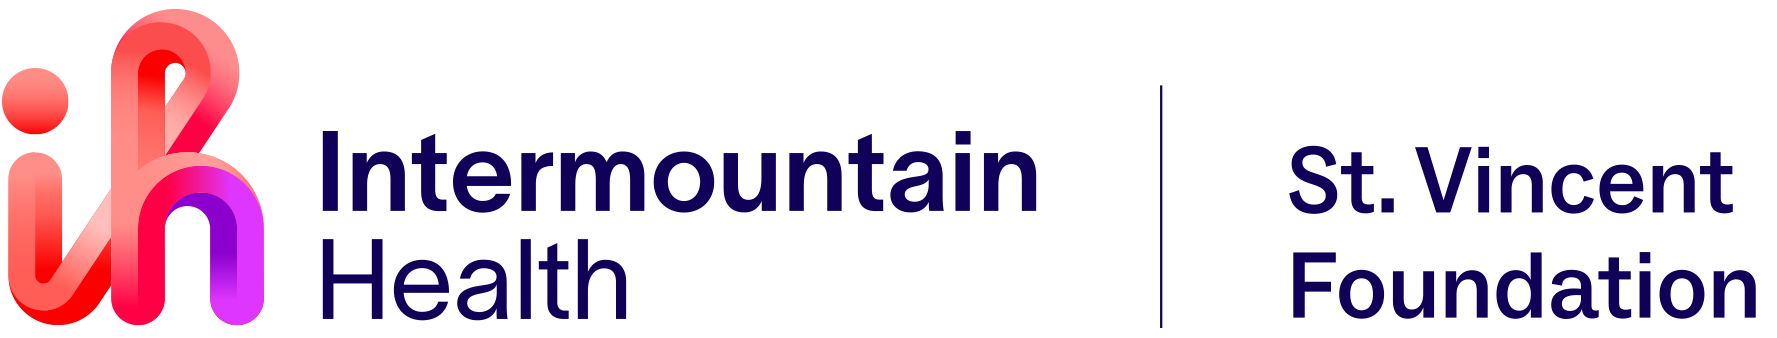 Intermountain St Vincent Foundation logo